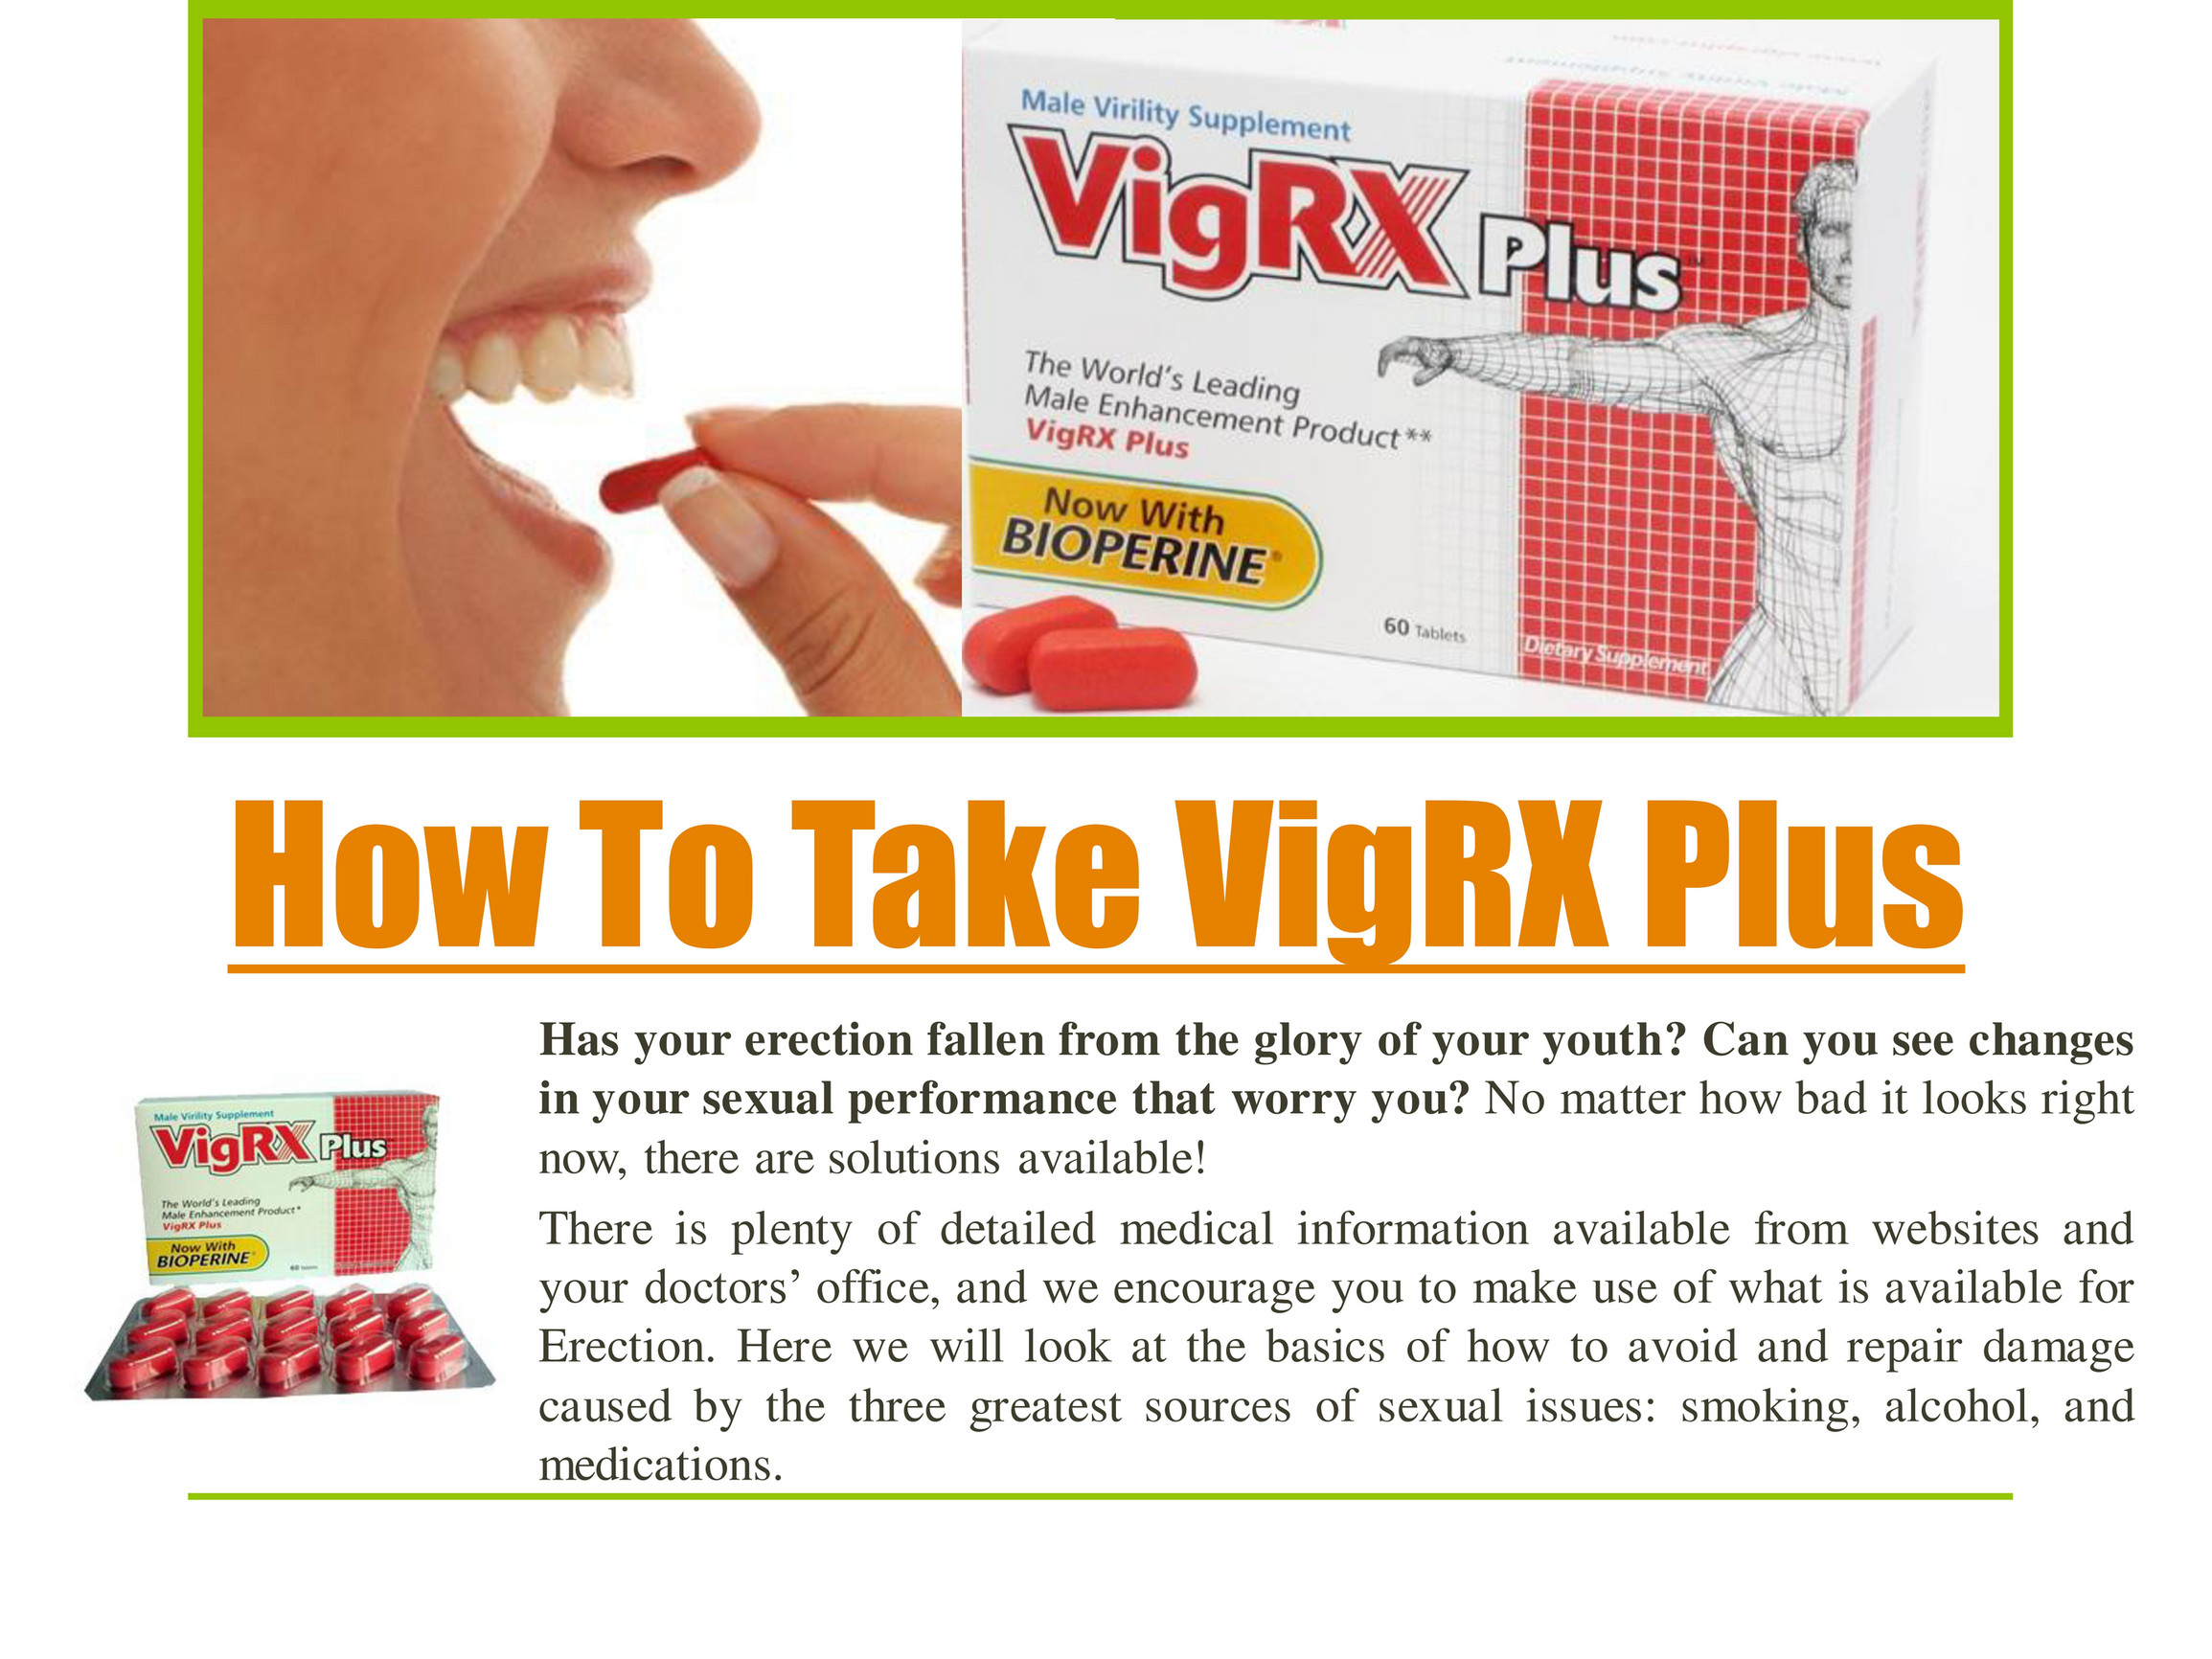 vigrx plus pills - taking vigrx - Page 1 - Created with Publitas.com